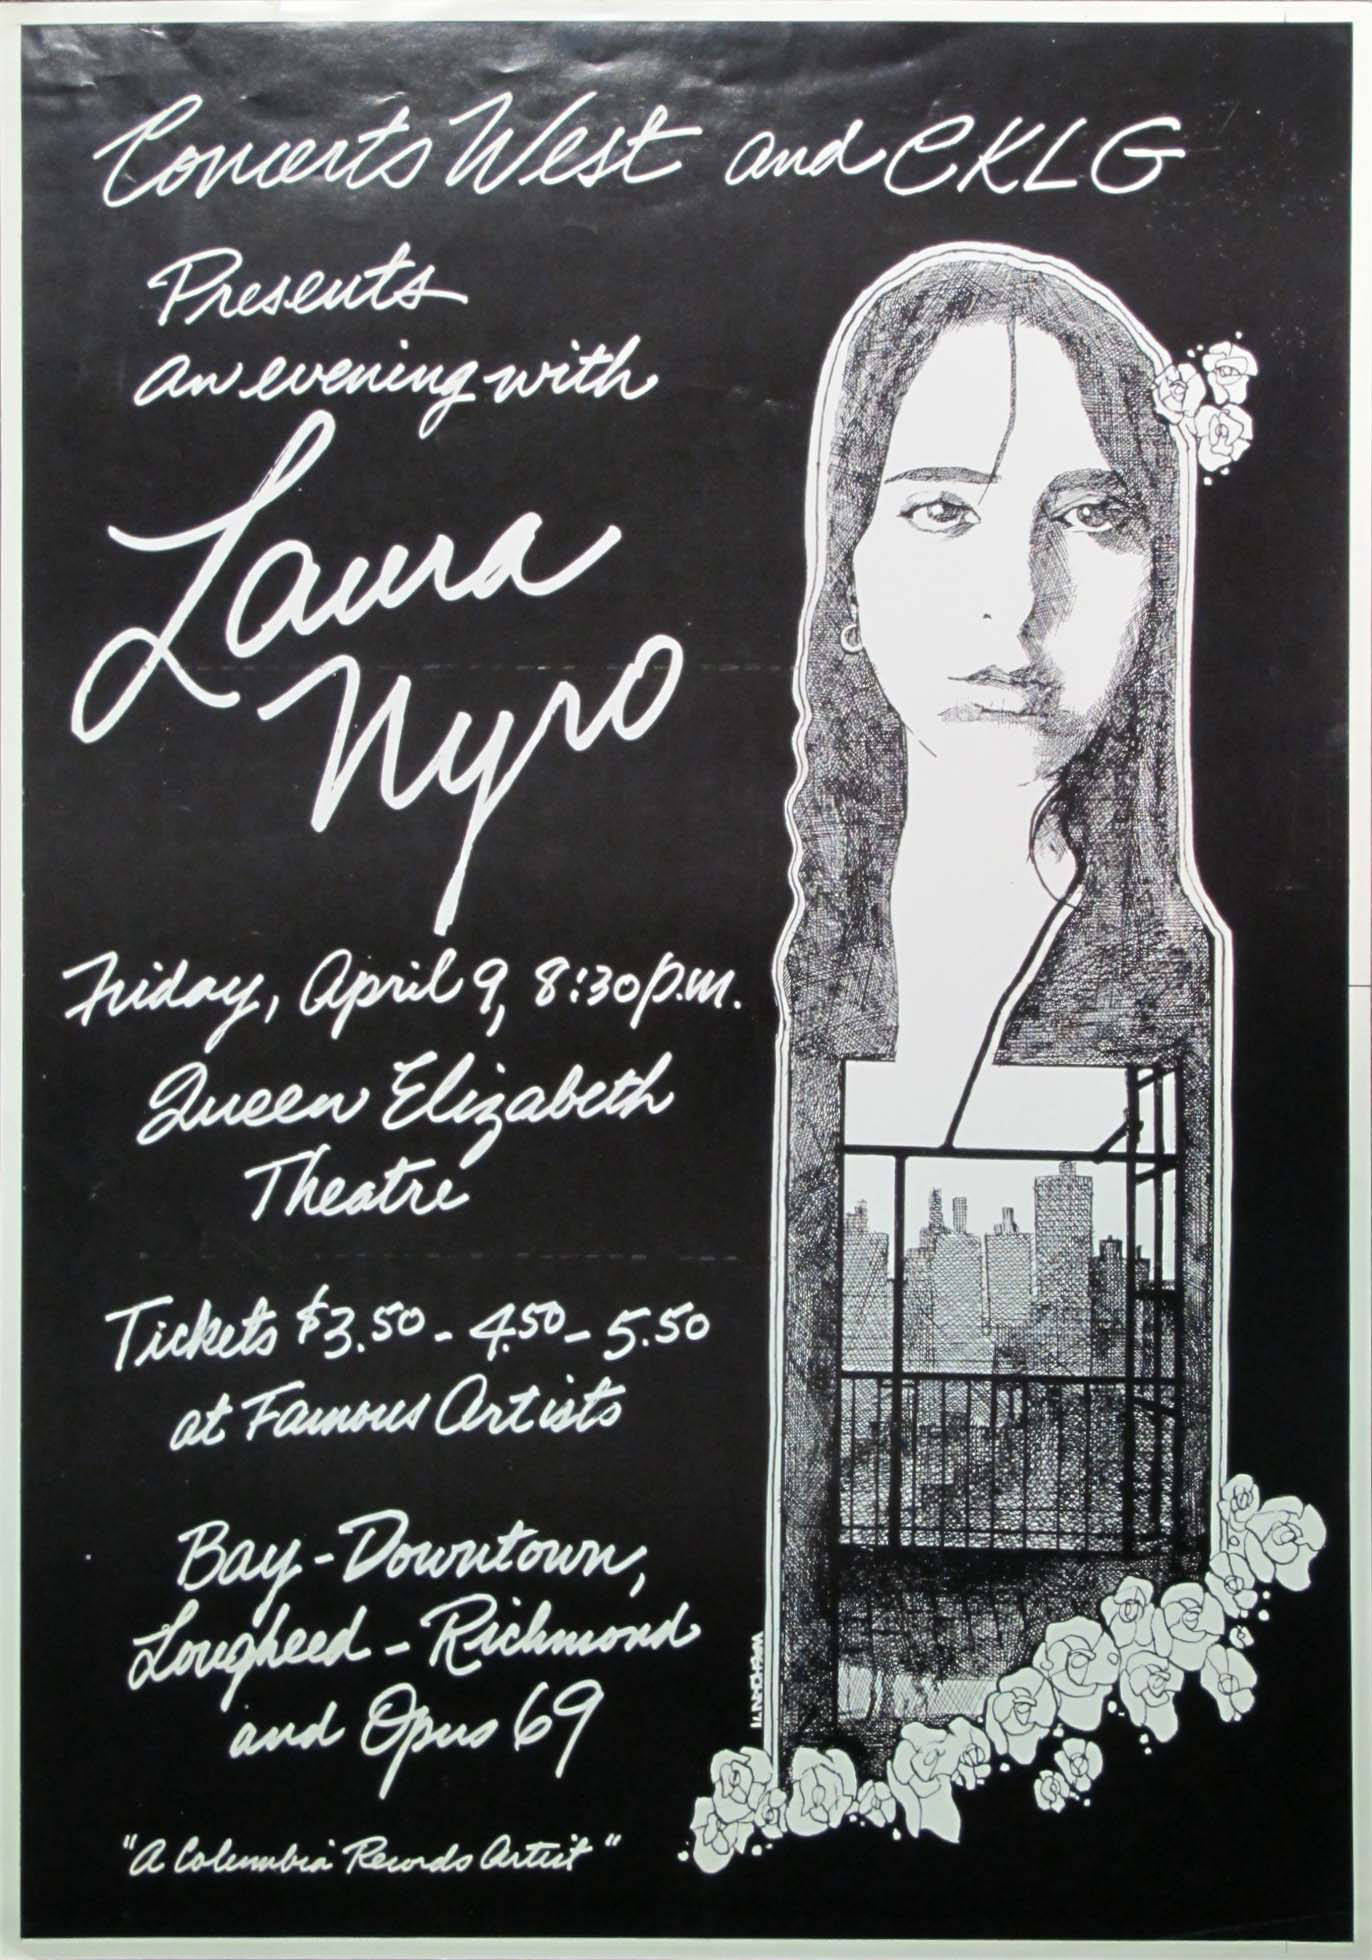 Laura Nyro Original Concert Poster